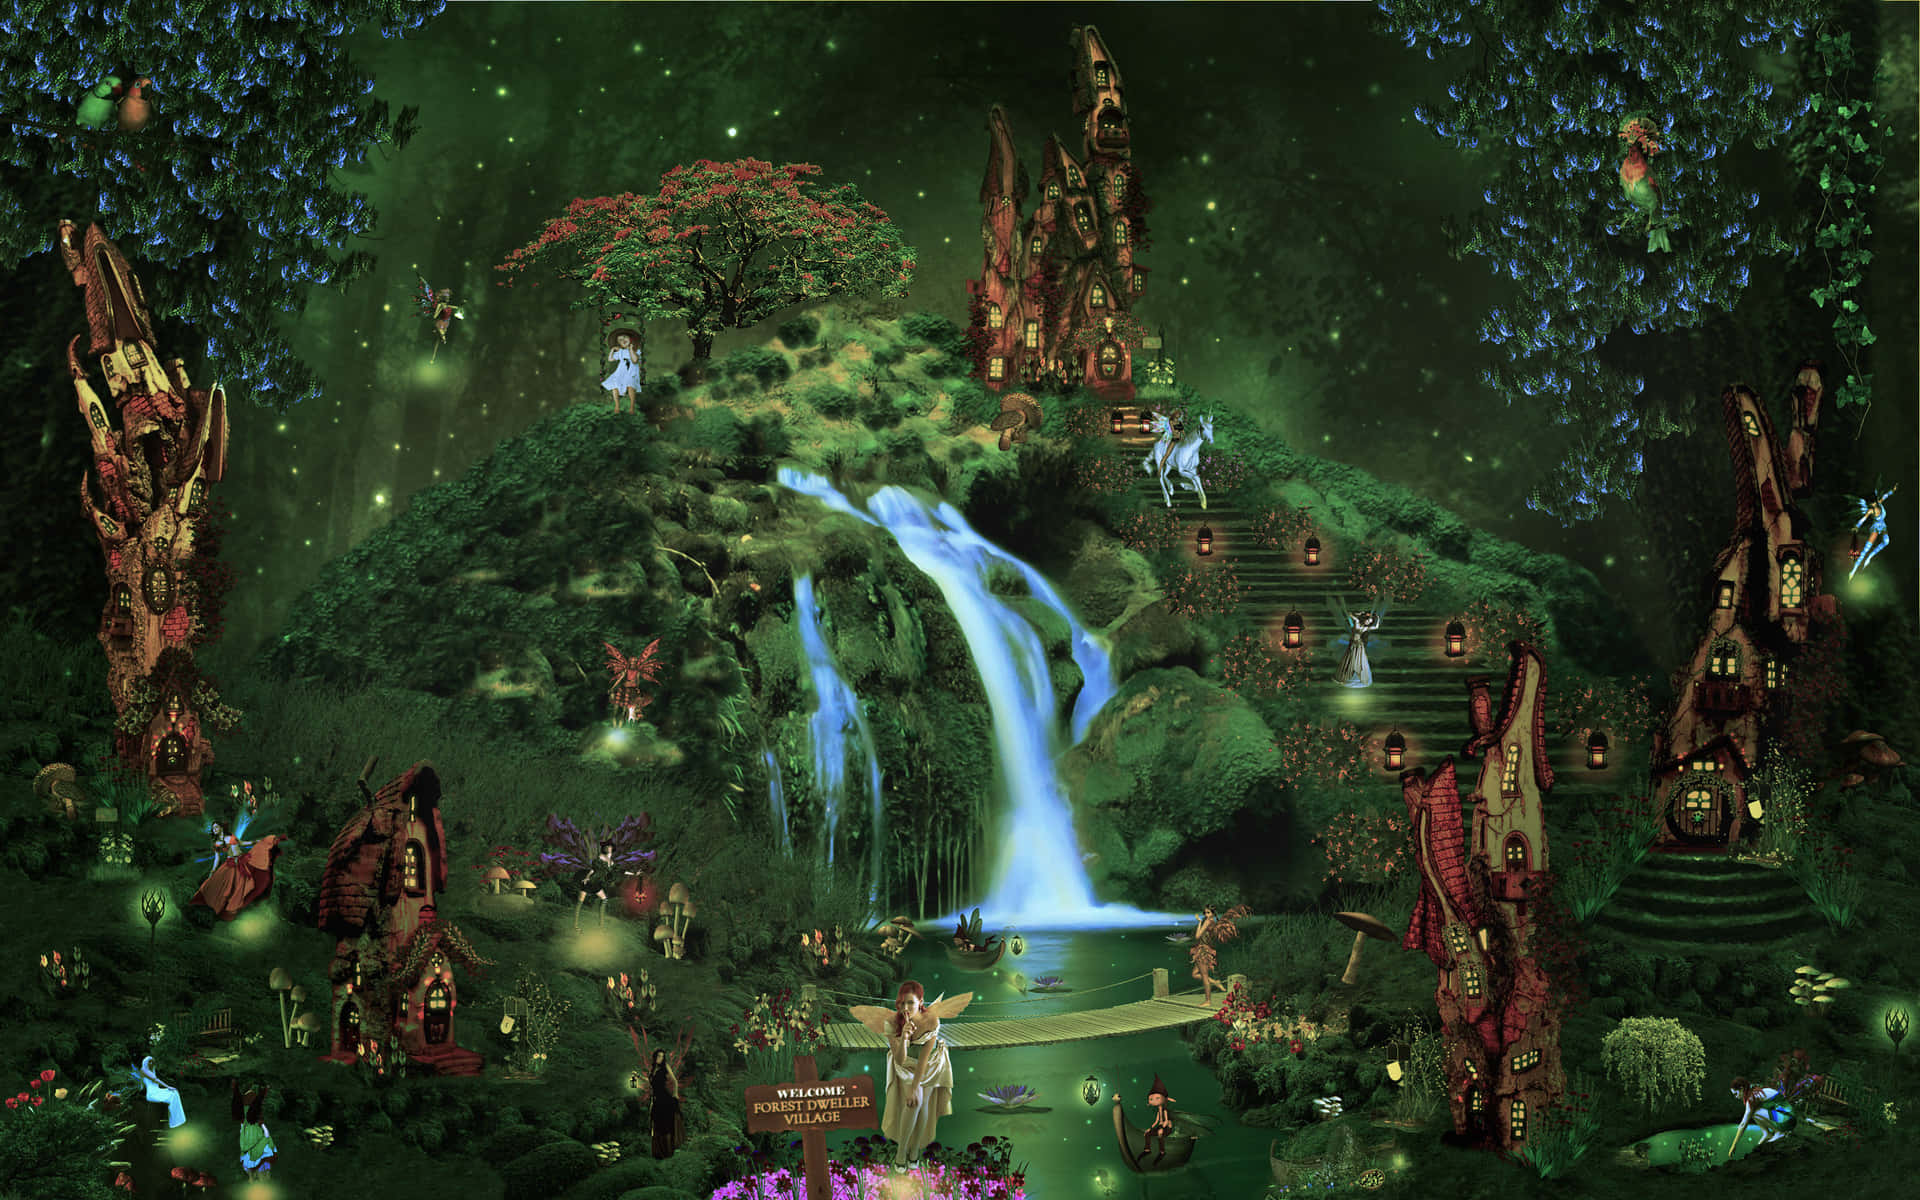 Enchanted_ Fairy_ Grunge_ Waterfall_ Landscape.jpg Wallpaper